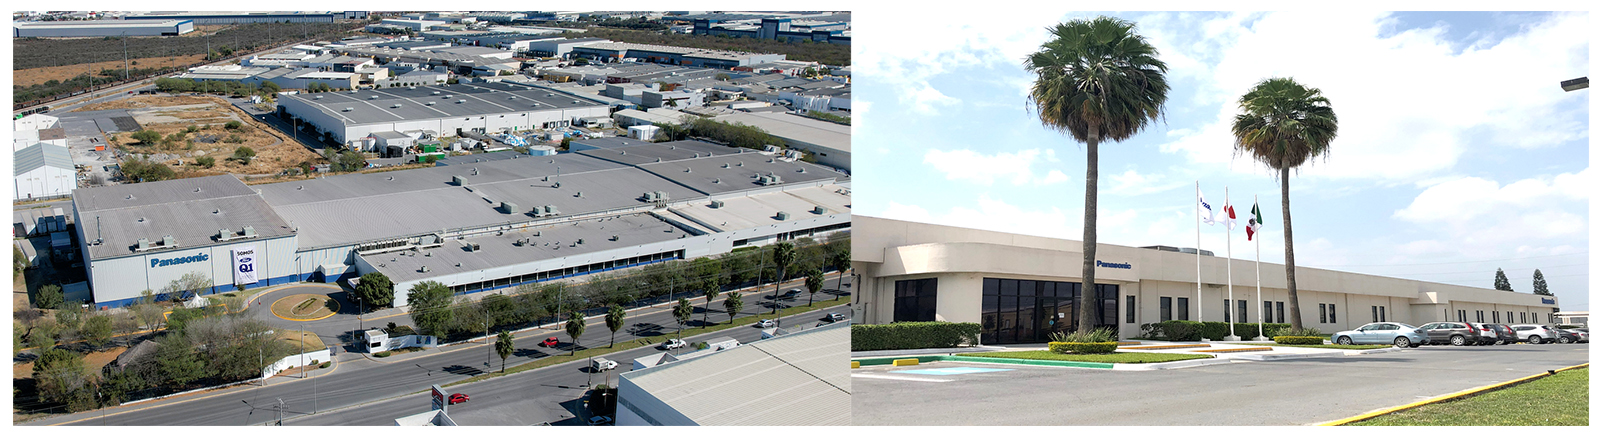 Photo: Mexico factories of Panasonic Automotive Systems Company of America (PASA)